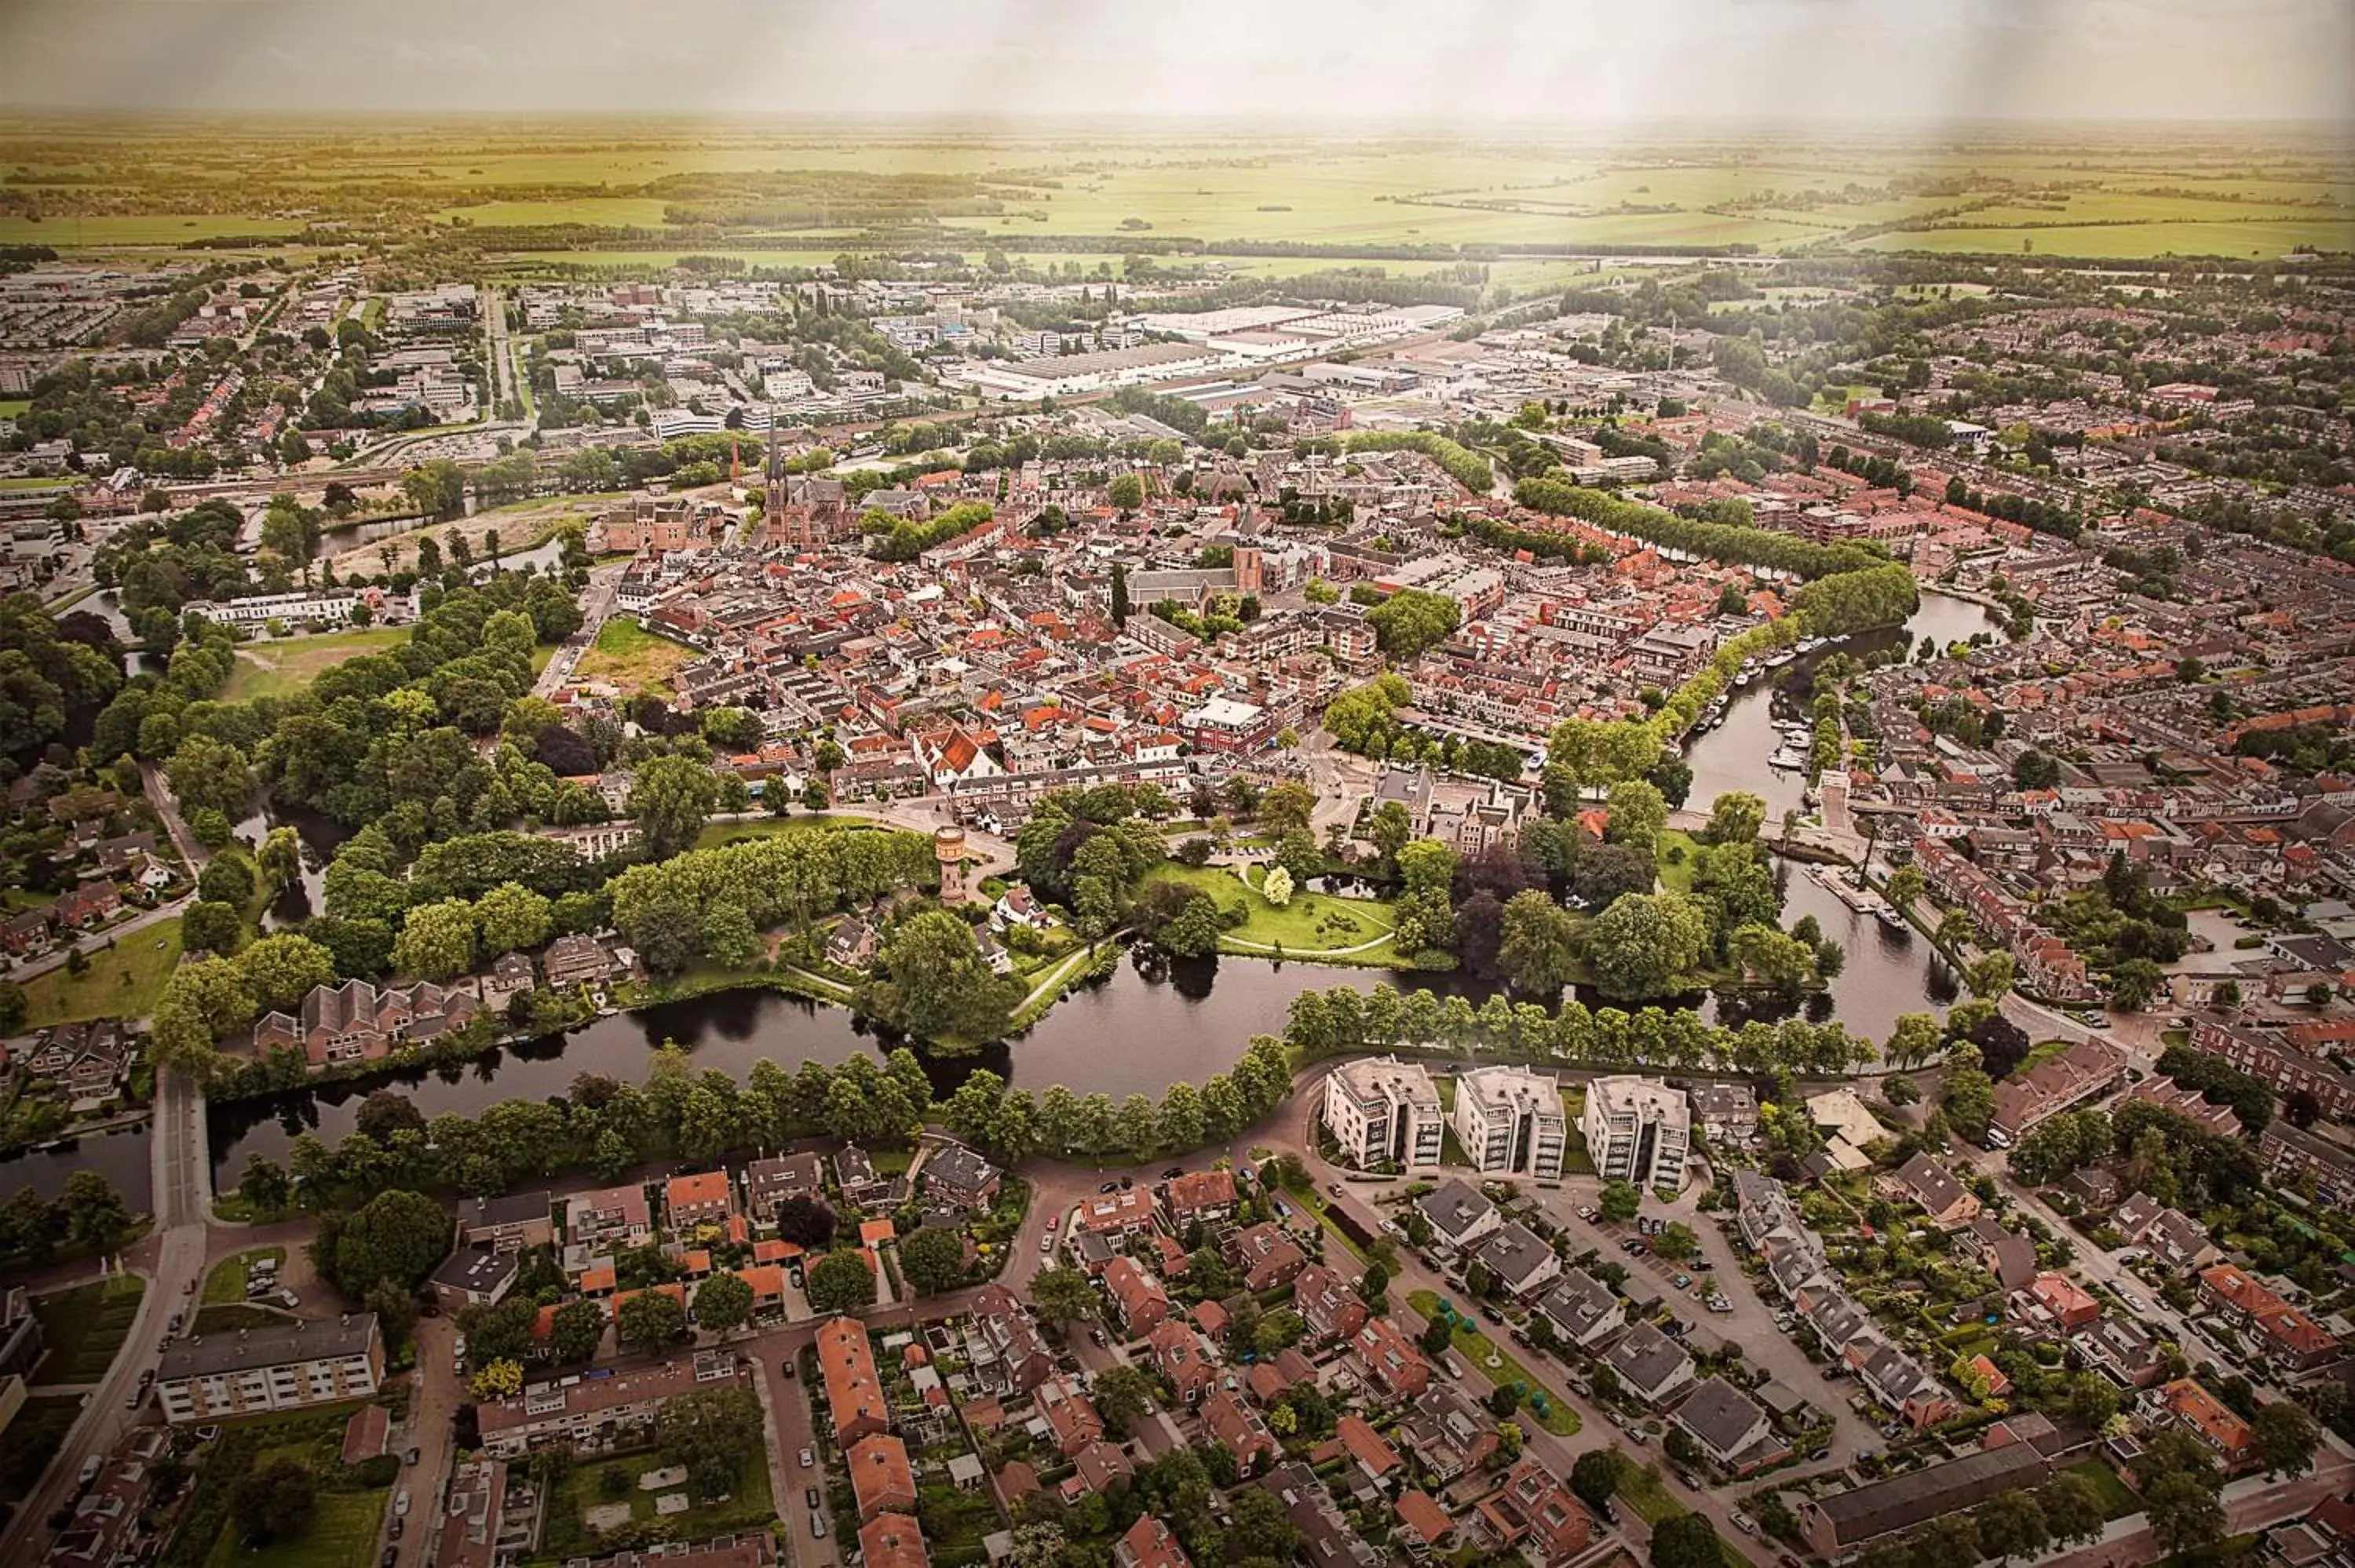 On site, Bird's-eye View in Best Western City Hotel Woerden